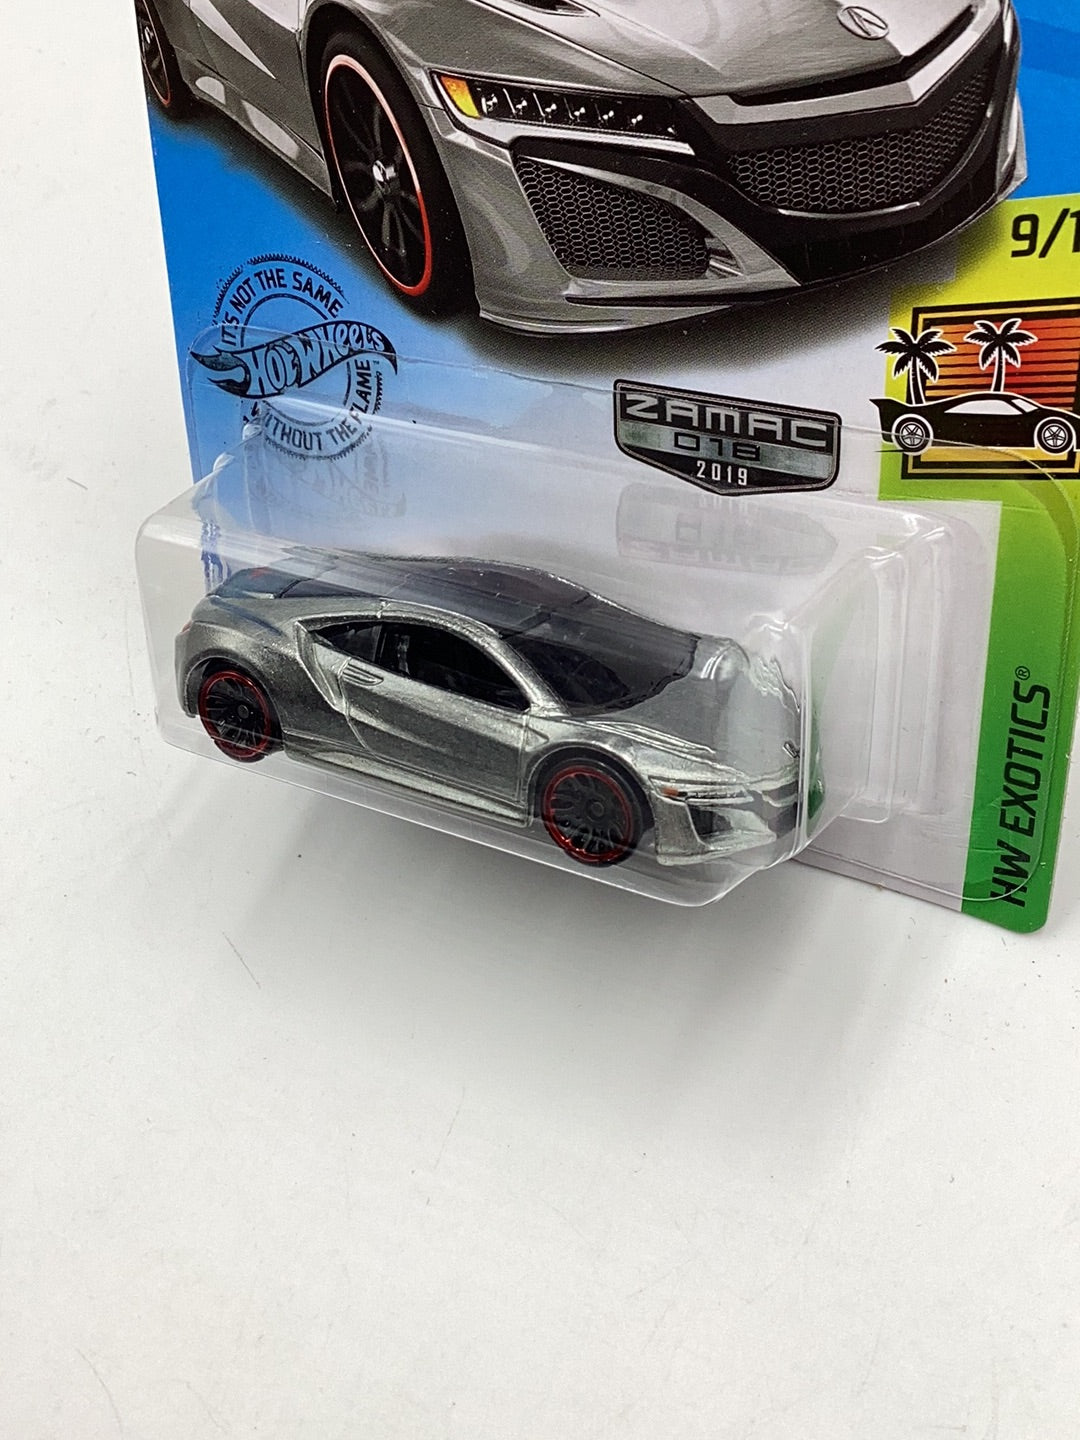 2019 Hot Wheels #199 ‘17 Acura NSX Walmart Exclusive Zamac #16 145G